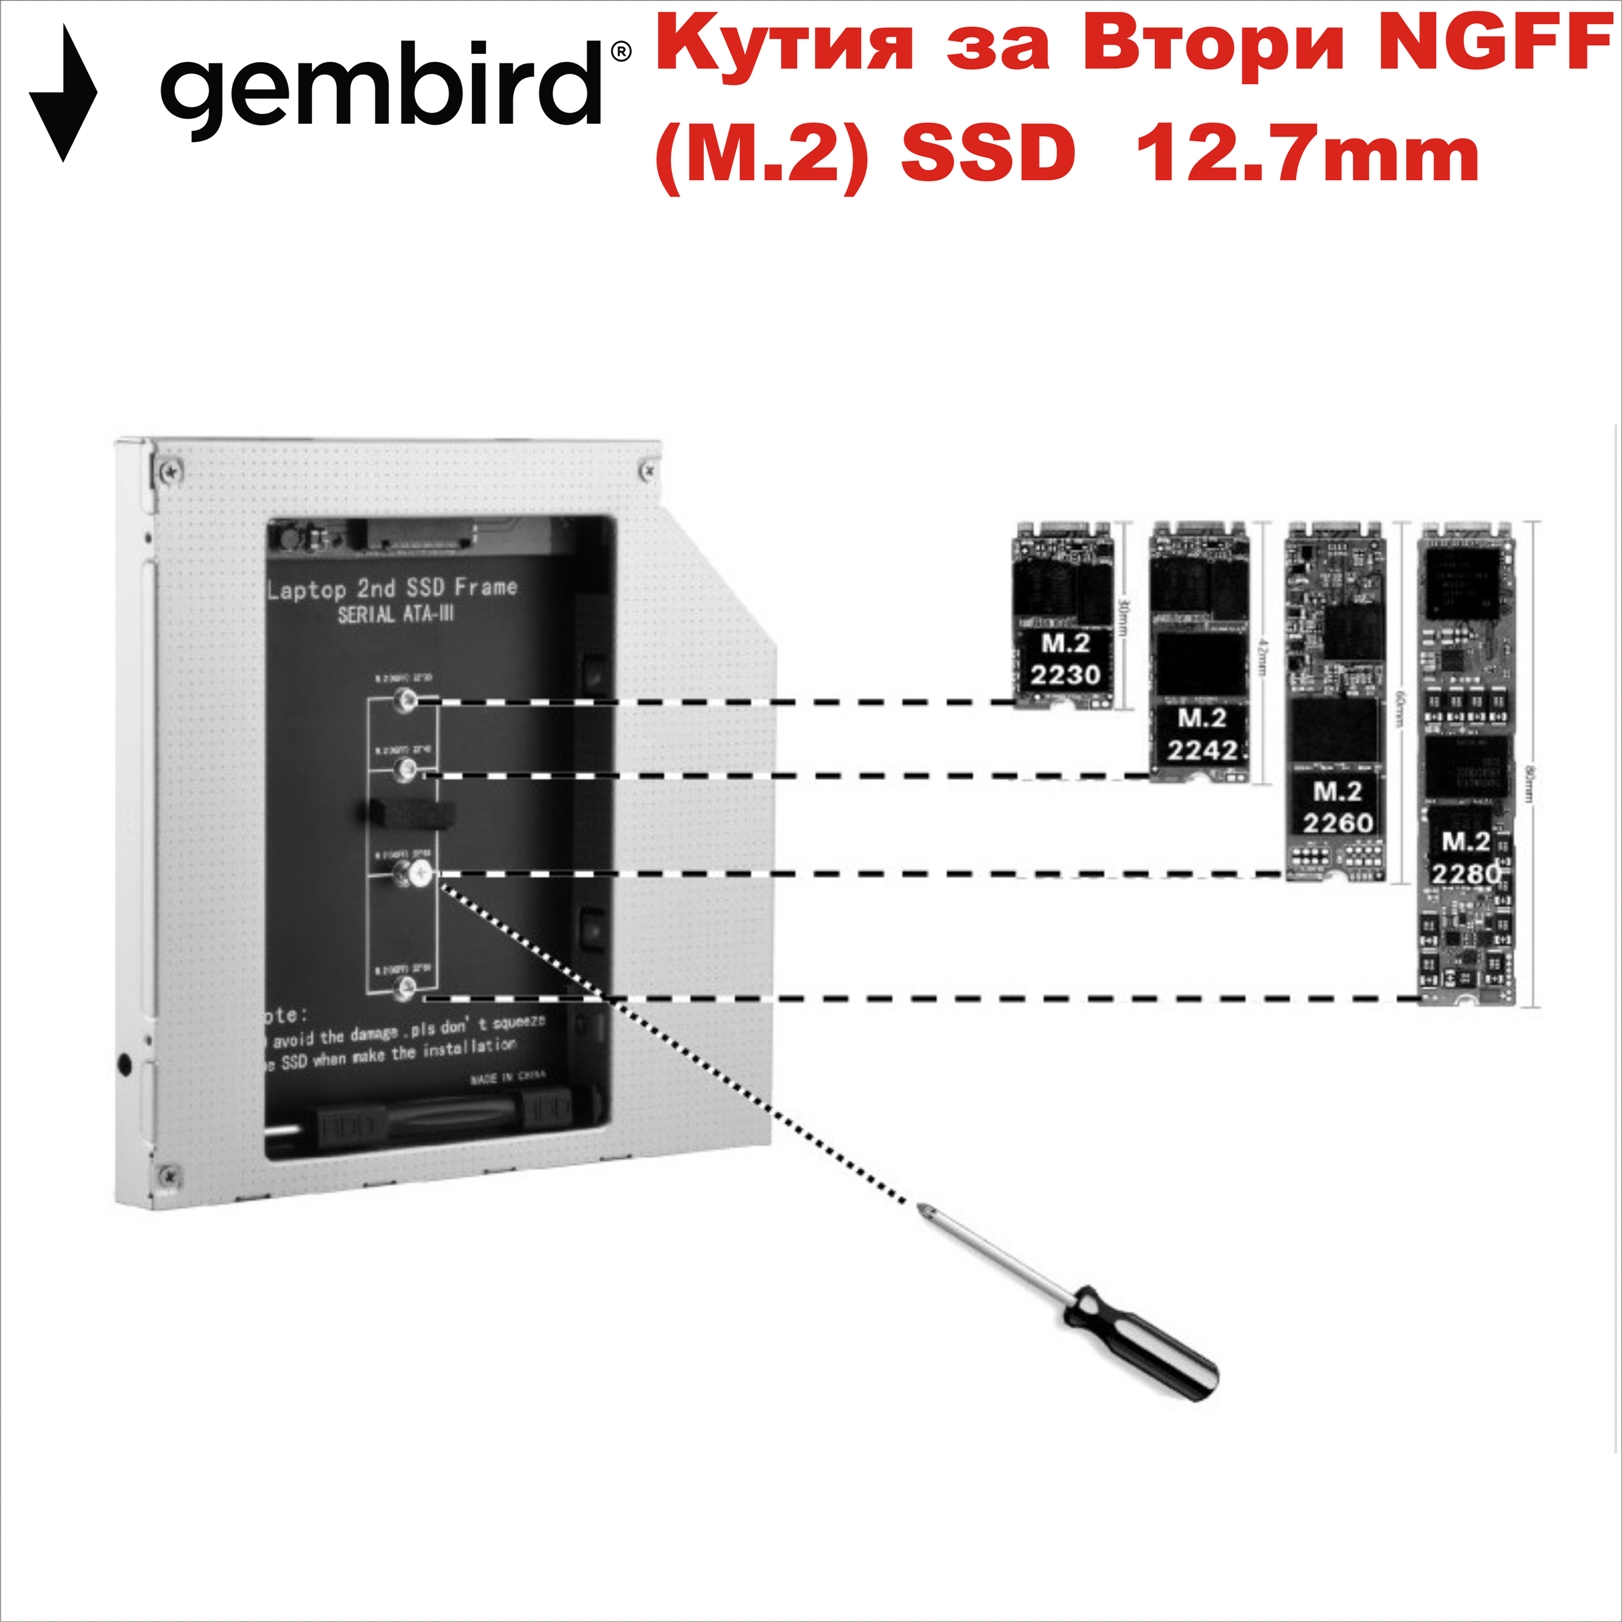 Kутия за Втори NGFF (M.2) SSD Gembird 12.7mm